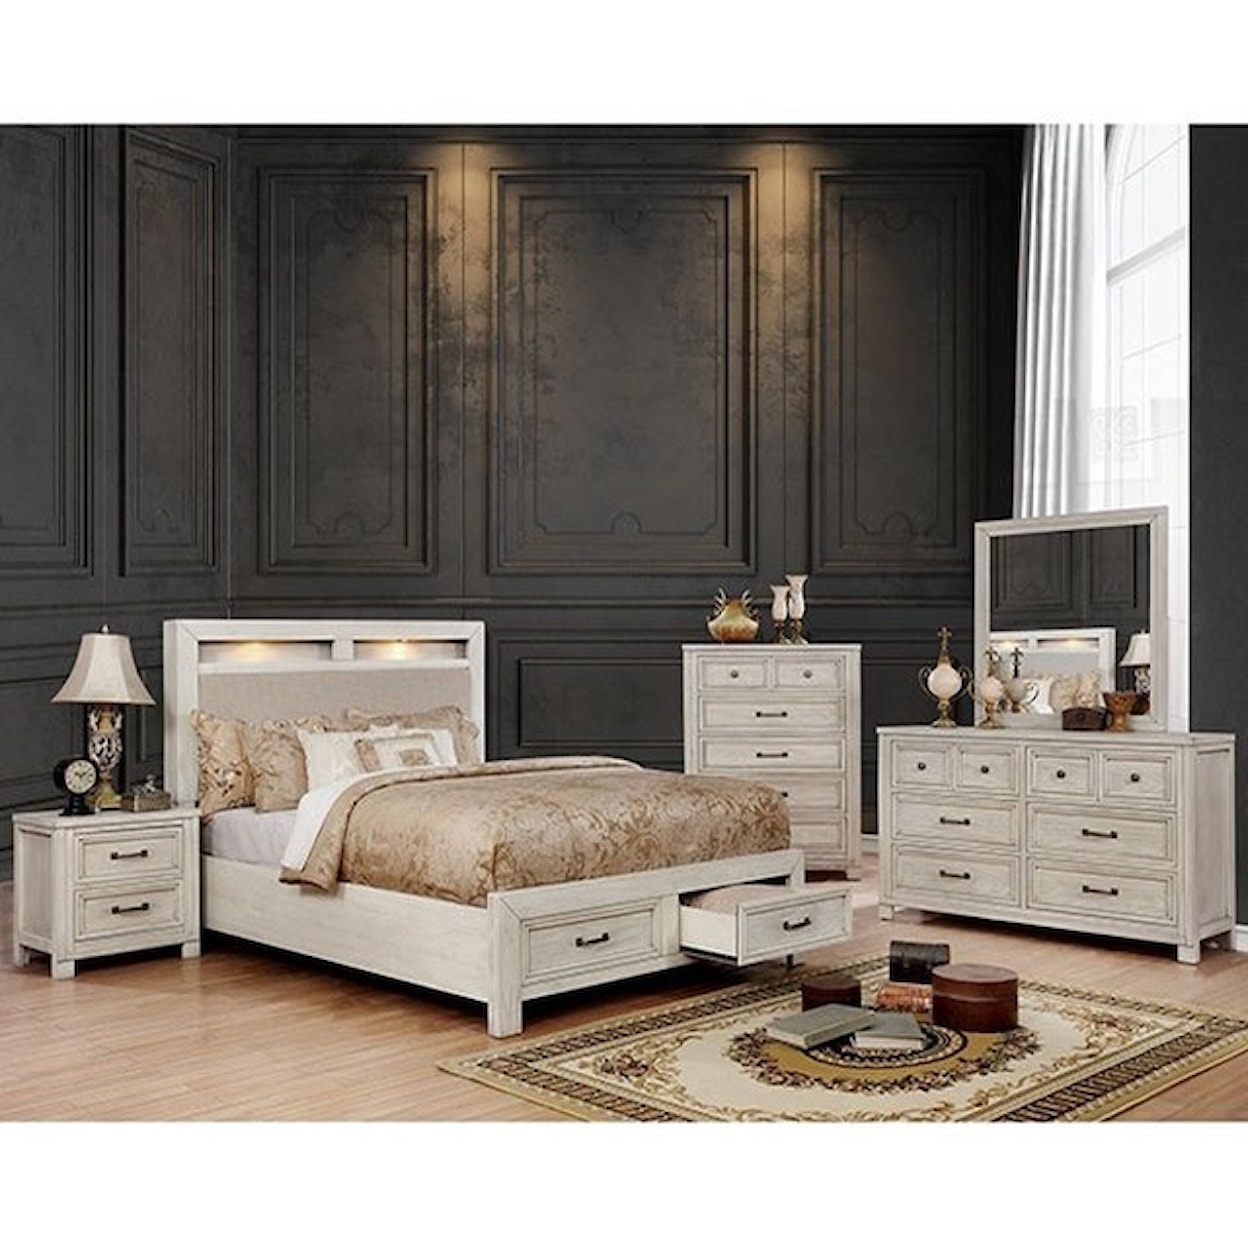 Furniture of America Tywyn Cal King Storage Bed